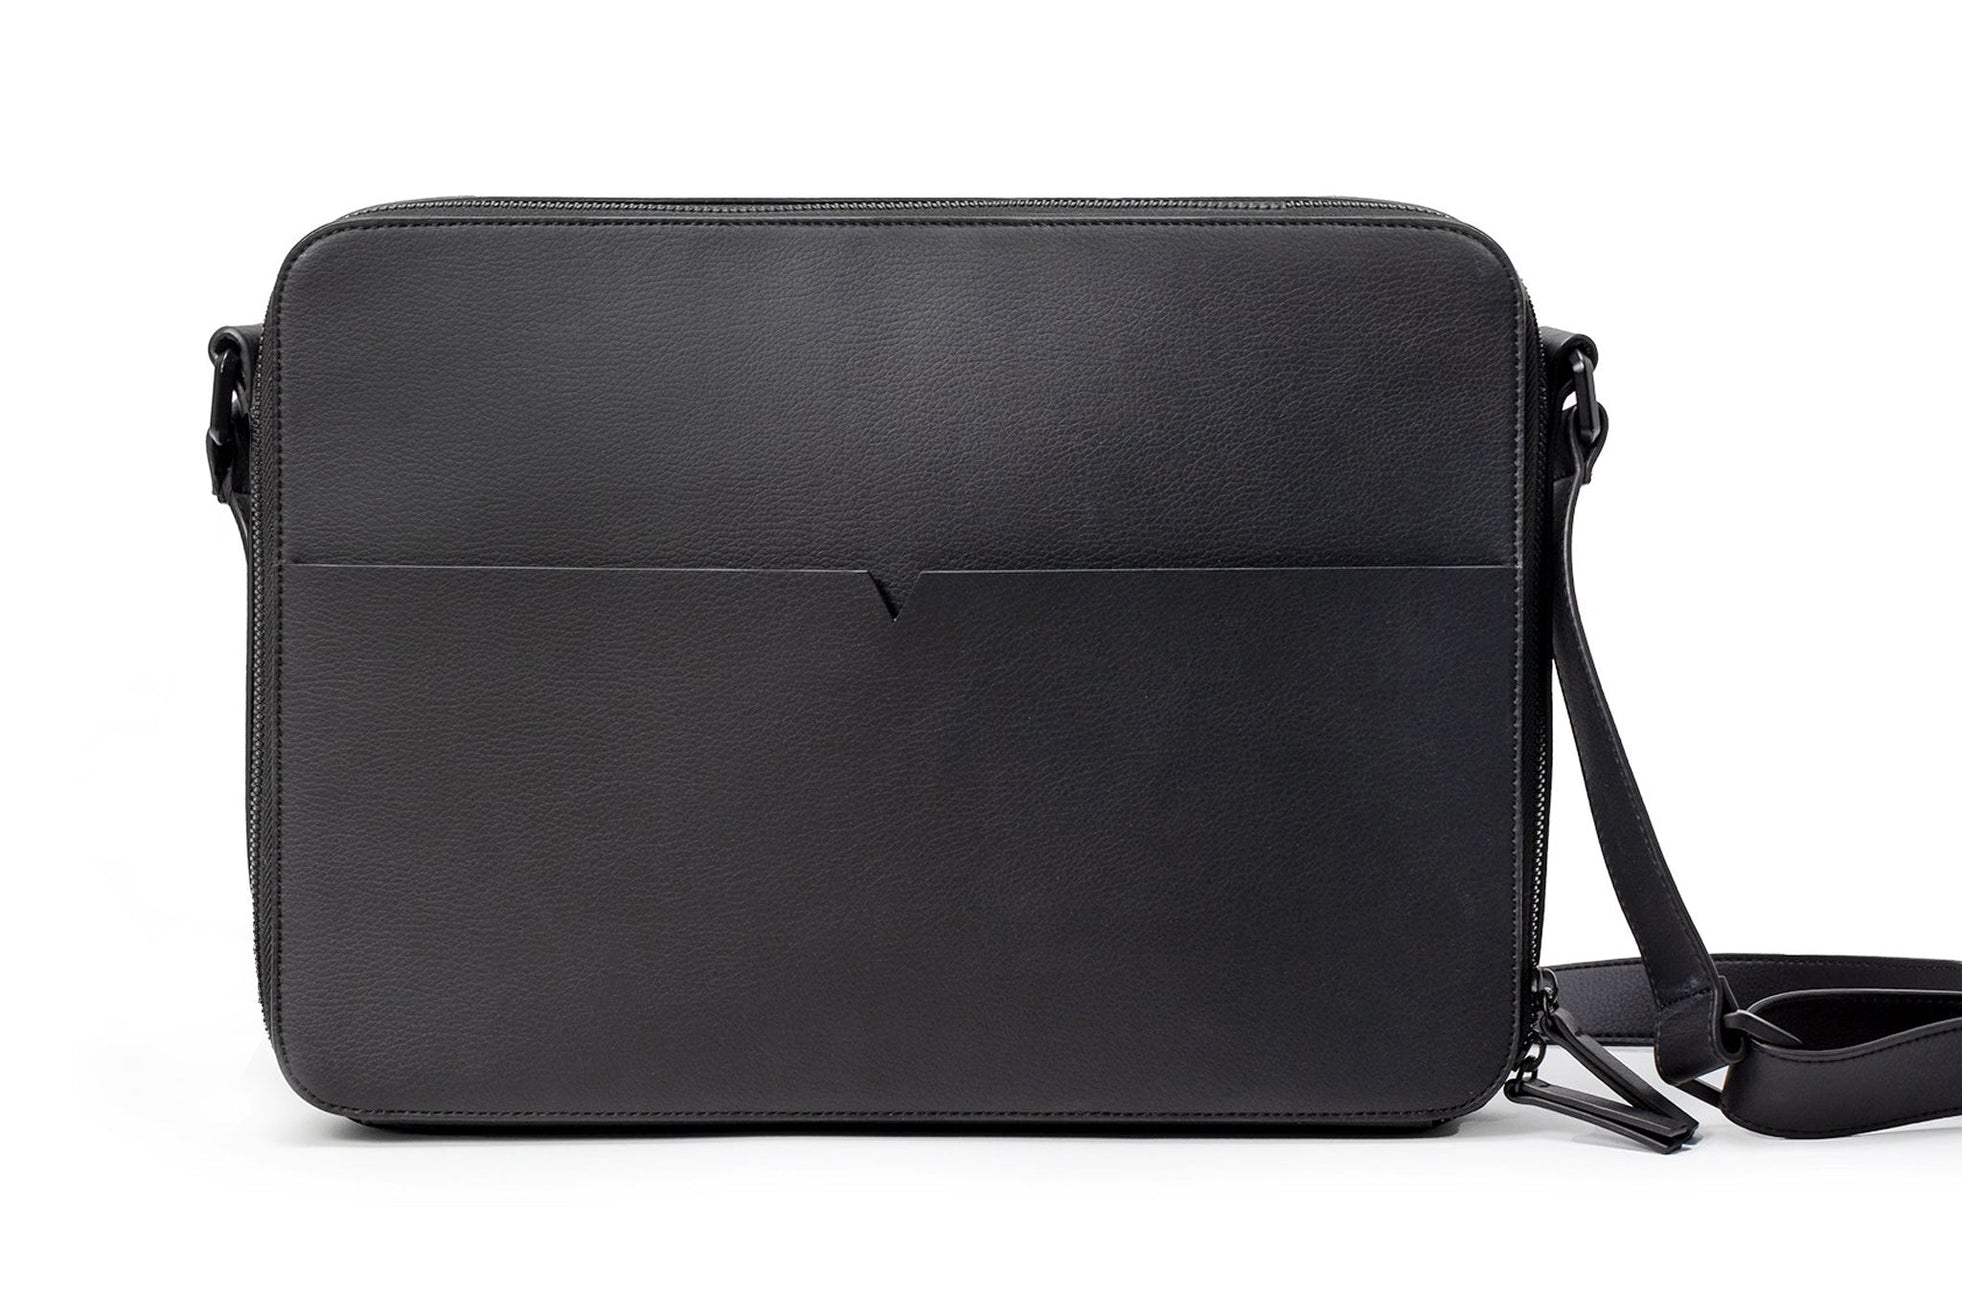 The Tech Messenger Bag - Sample Sale in Technik in Black image 1